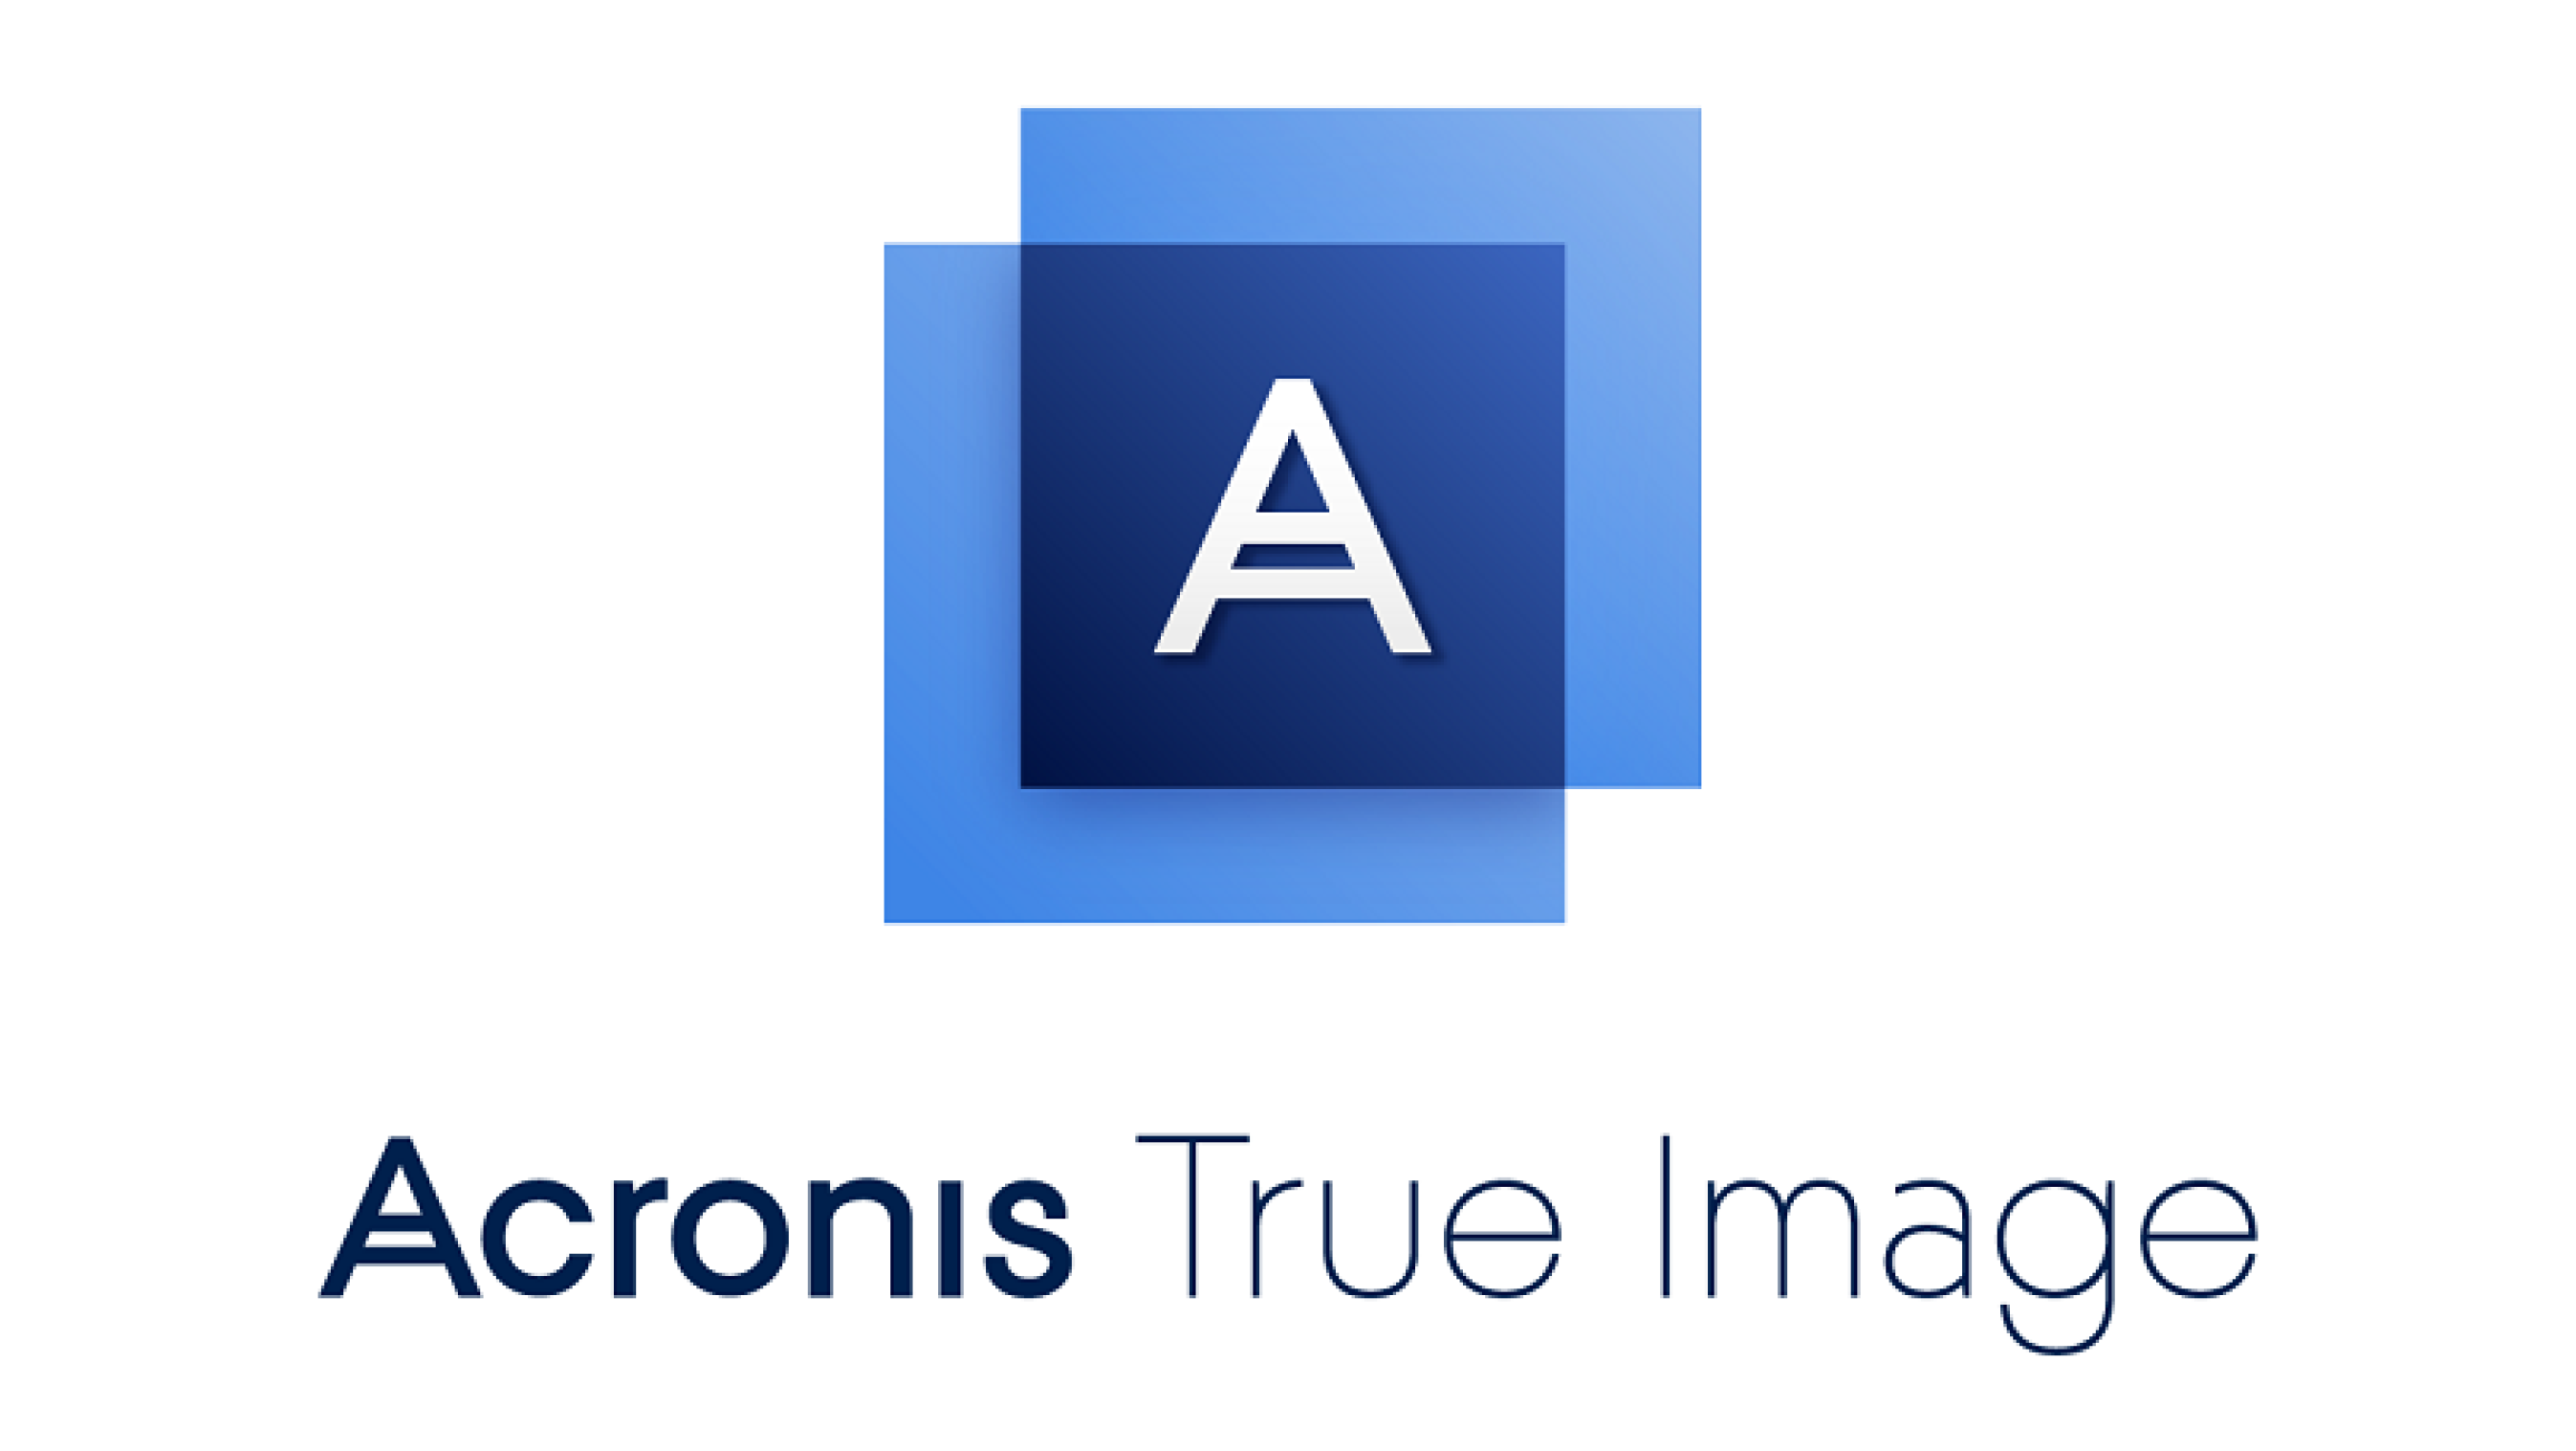 Acronis True Image Crack Full latest version Free Download 2022